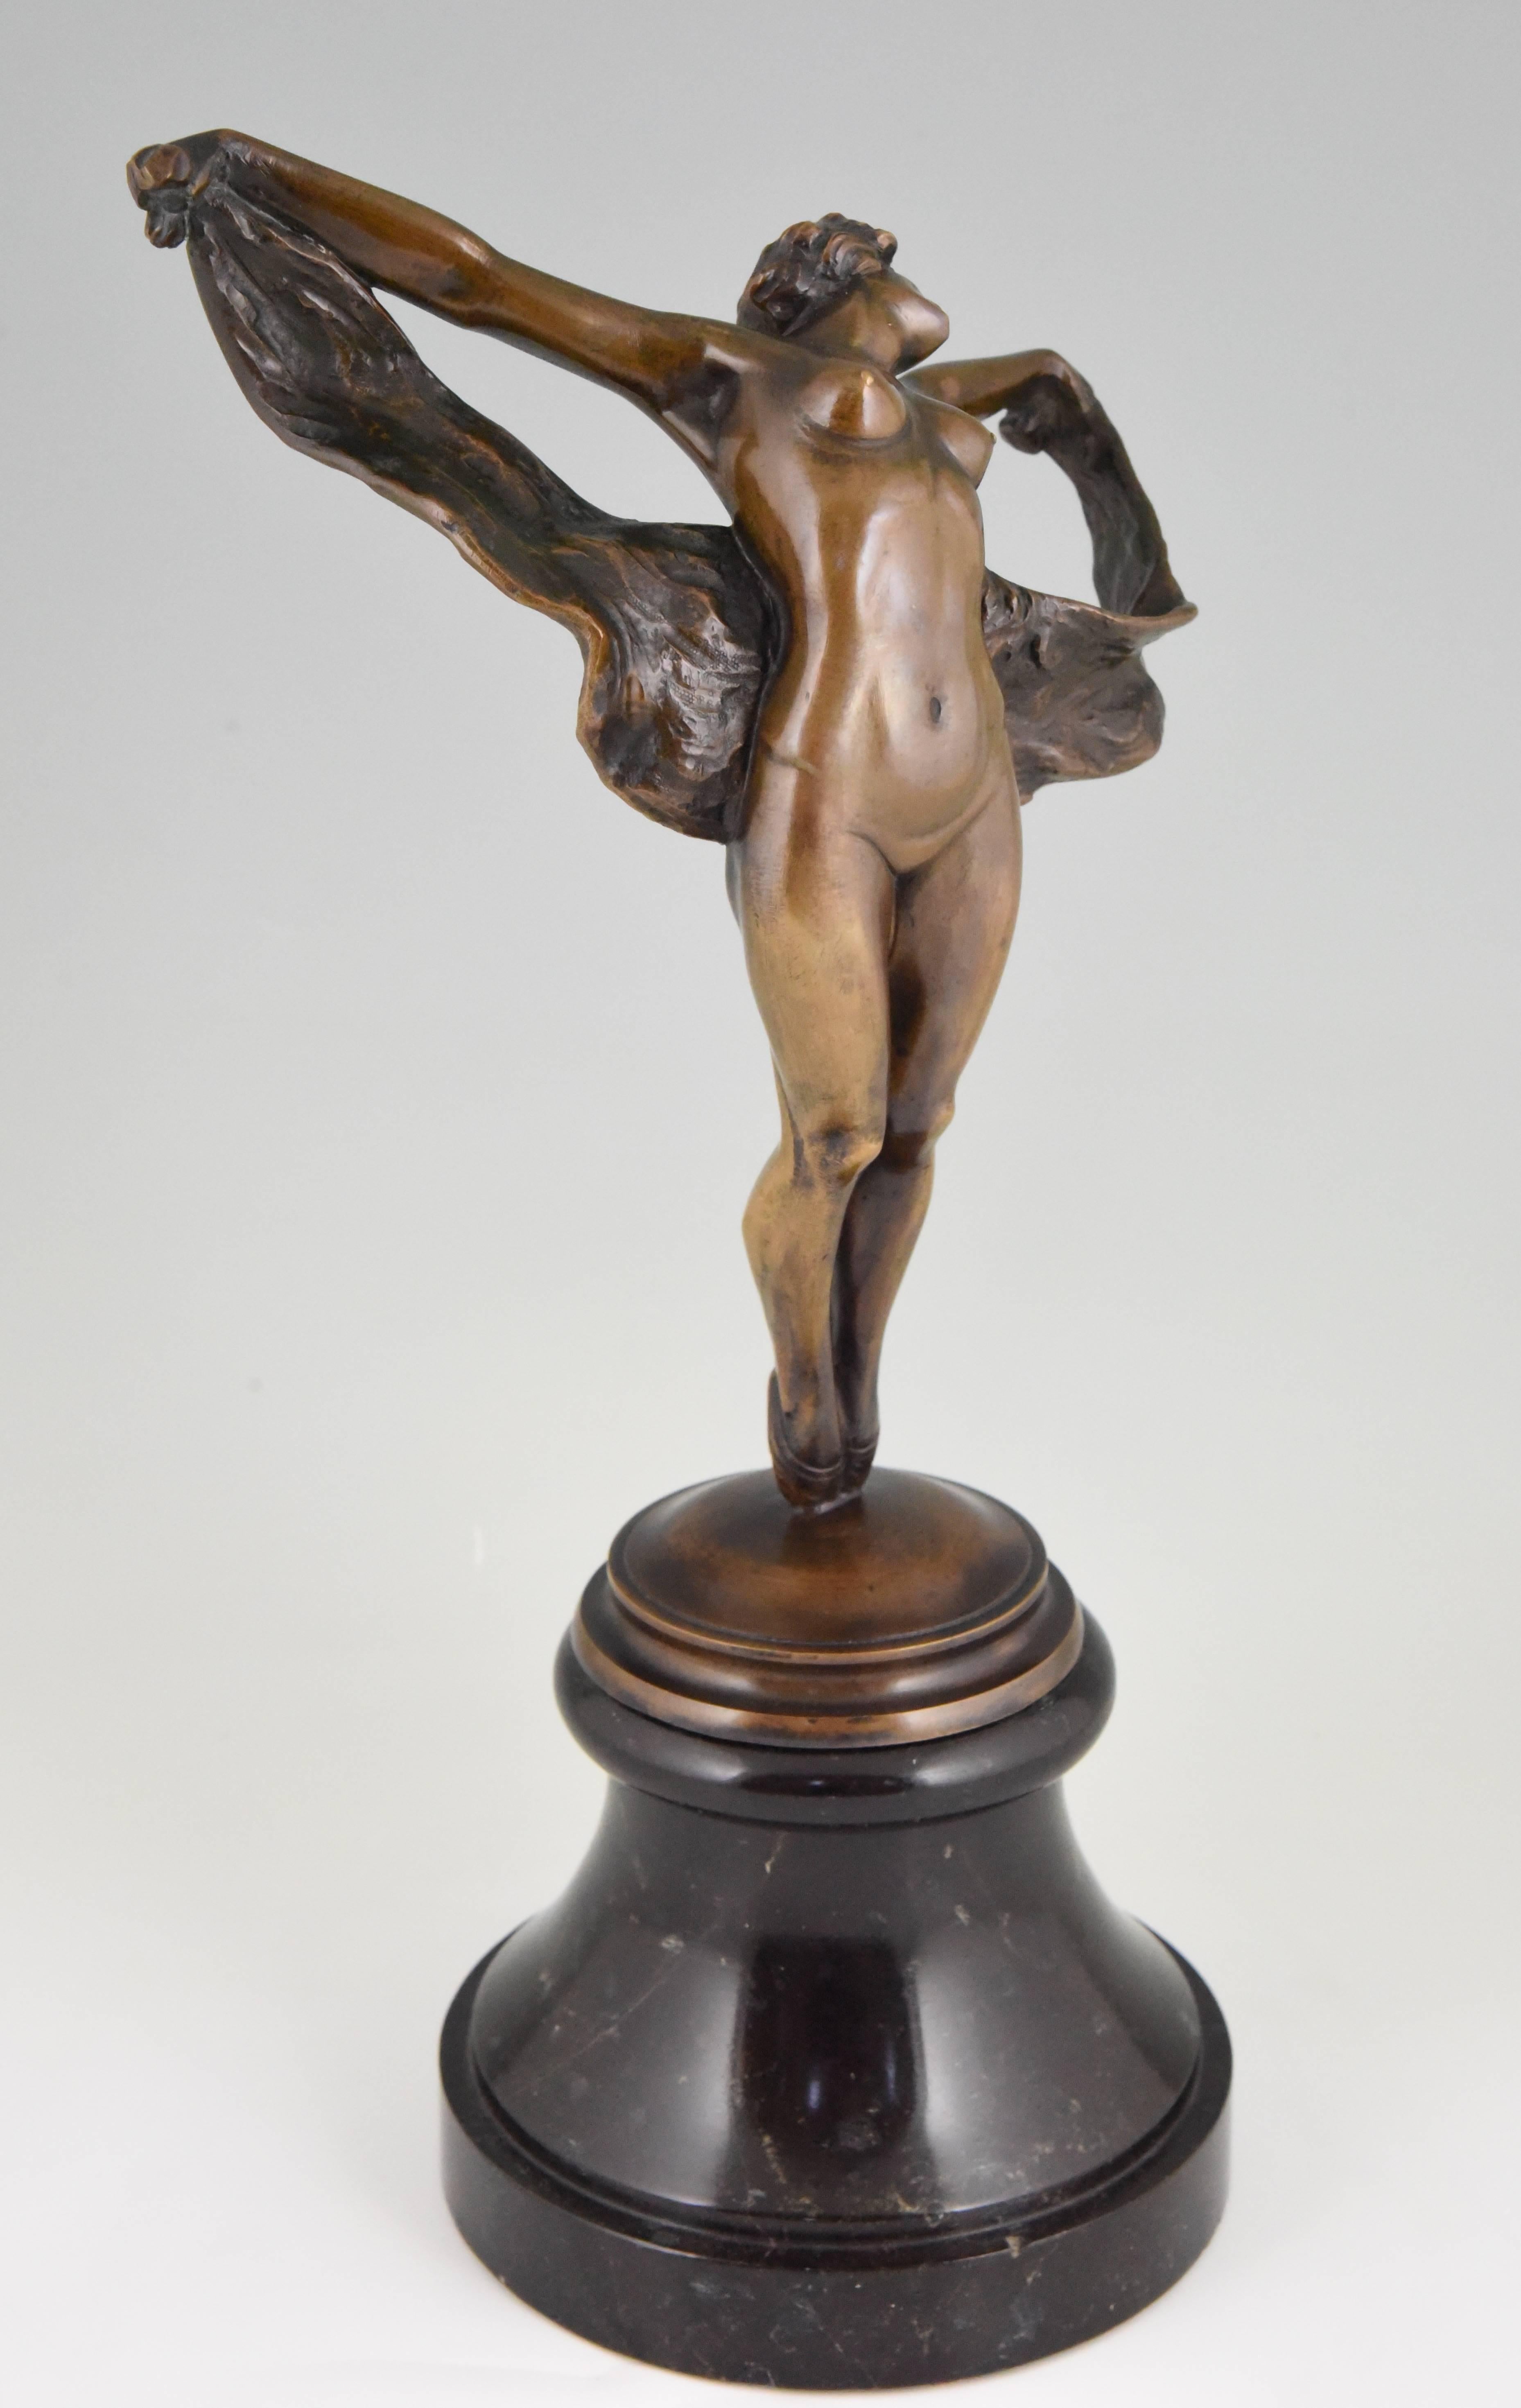 Belgian Art Nouveau Bronze Sculpture of a Dancing Nude by Joseph Zomers 1915